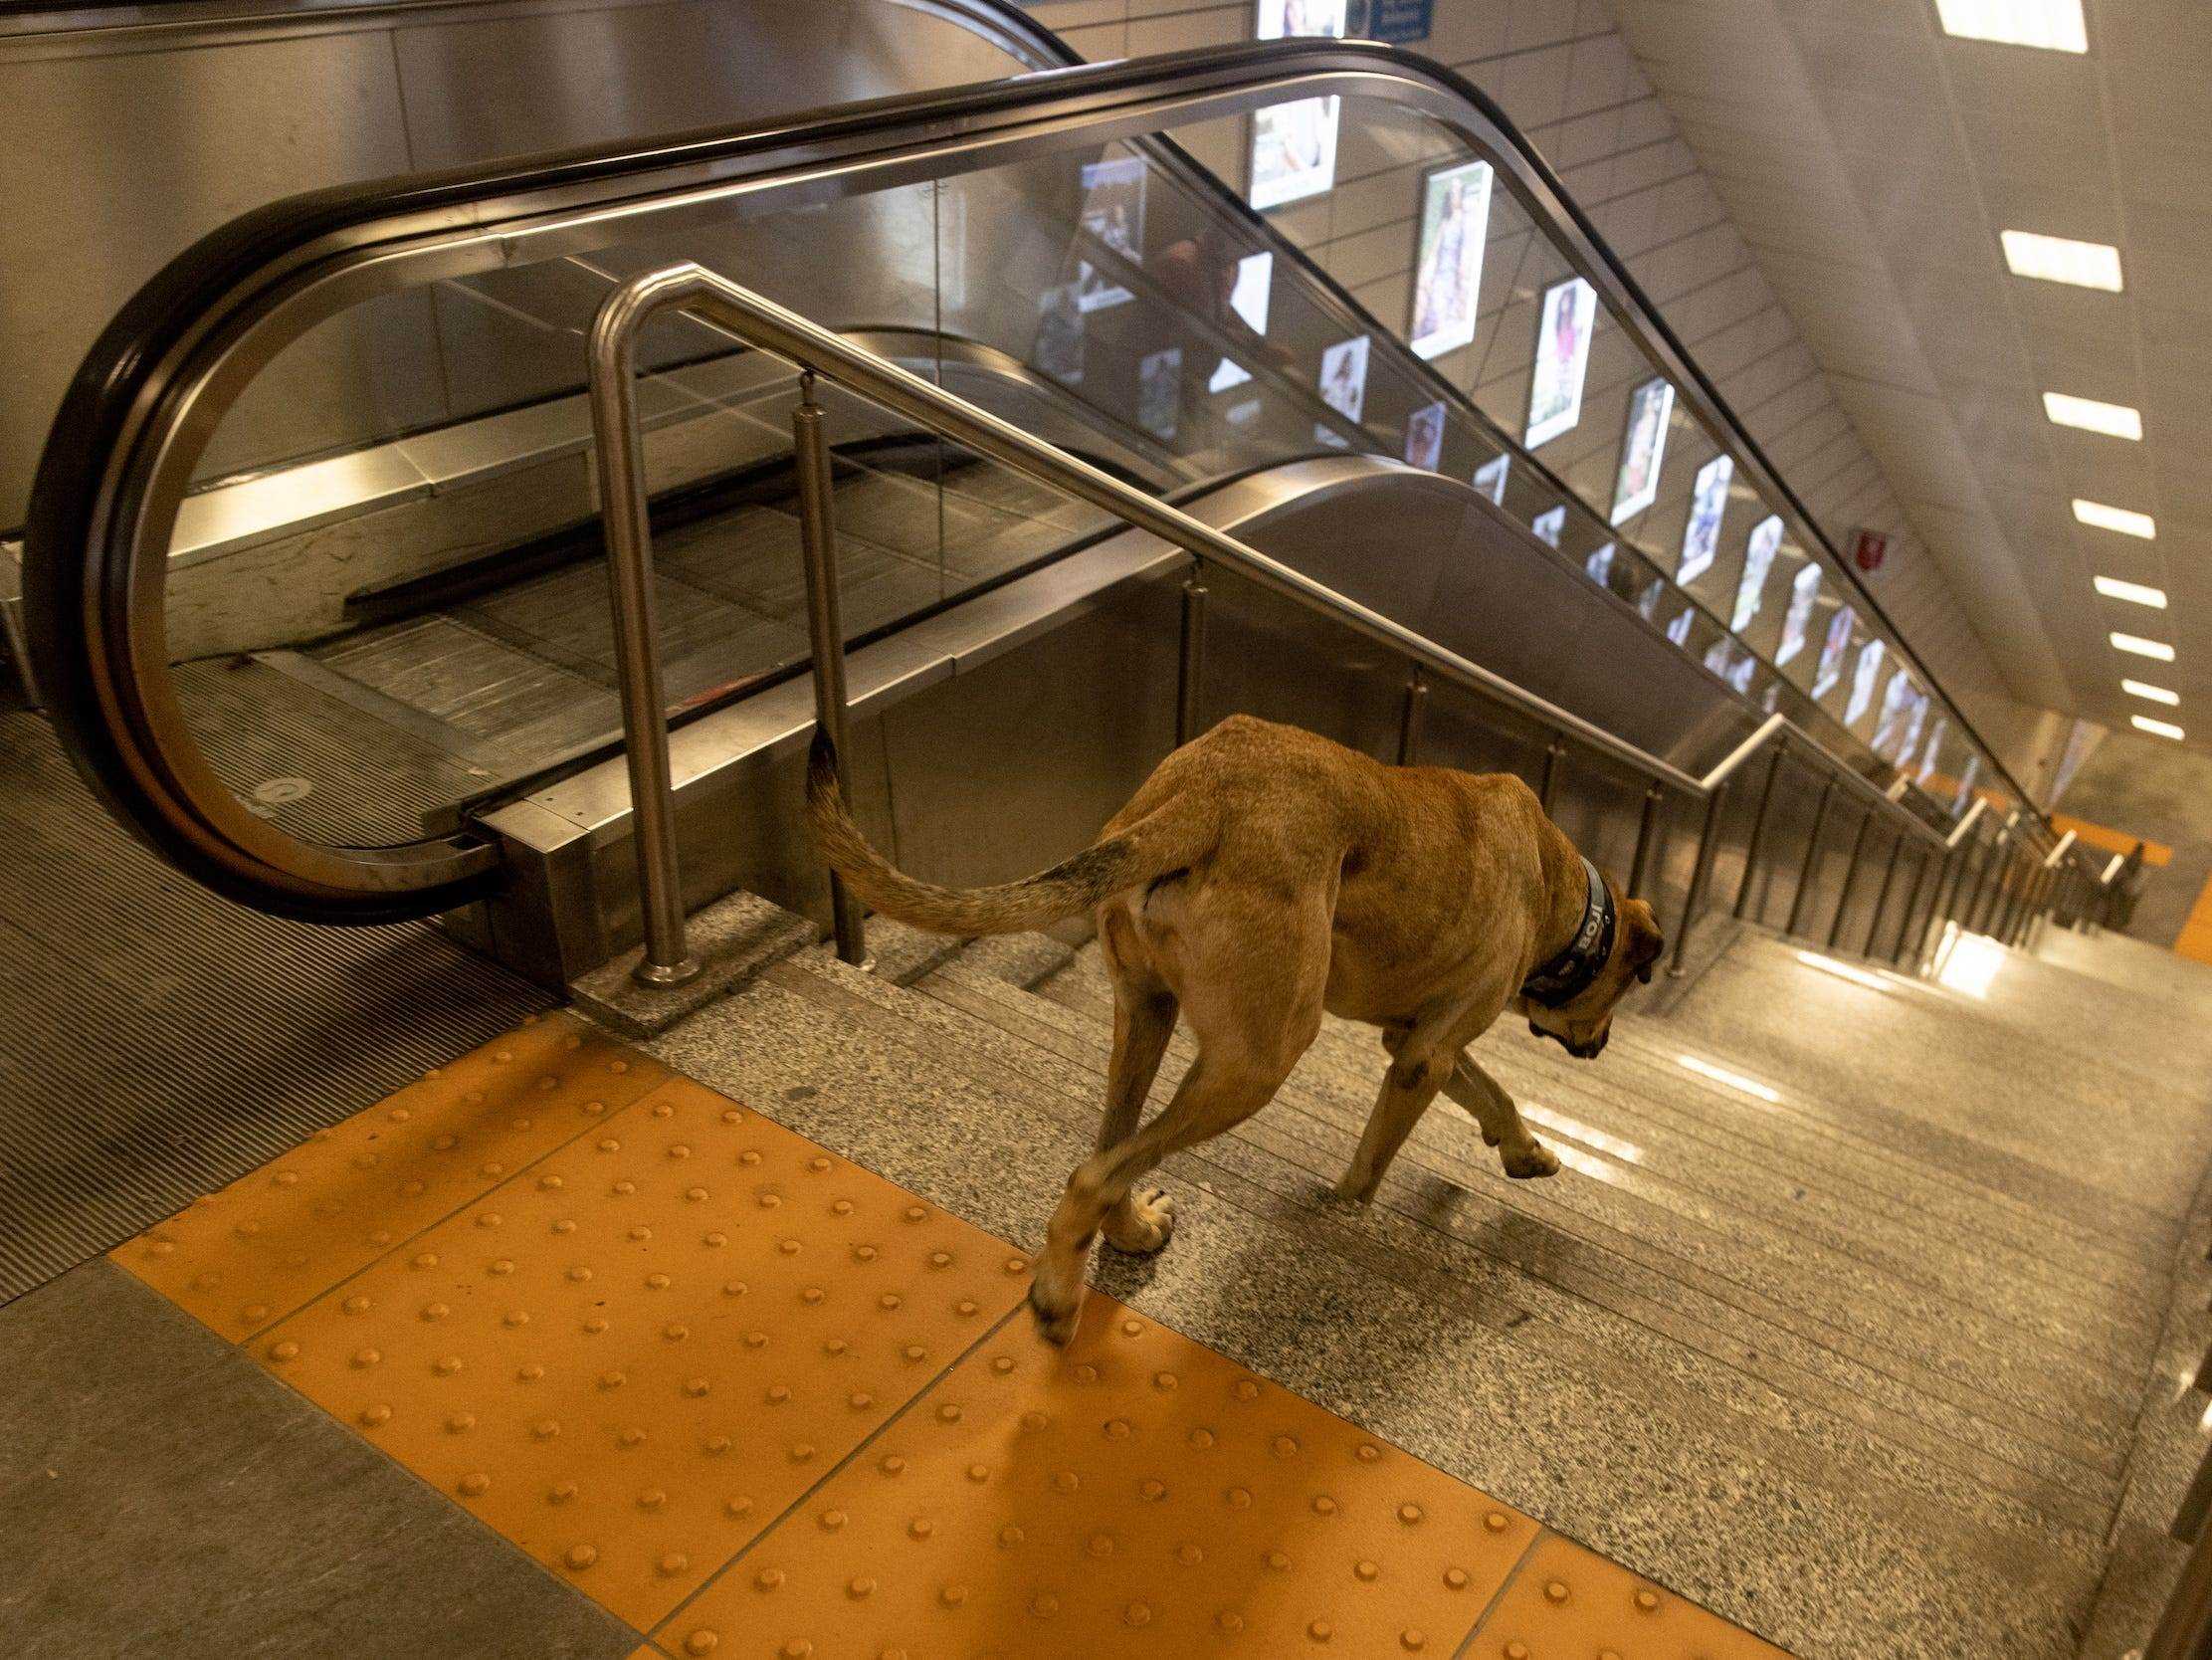 Boji steigt die Treppe der U-Bahnstation hinunter.